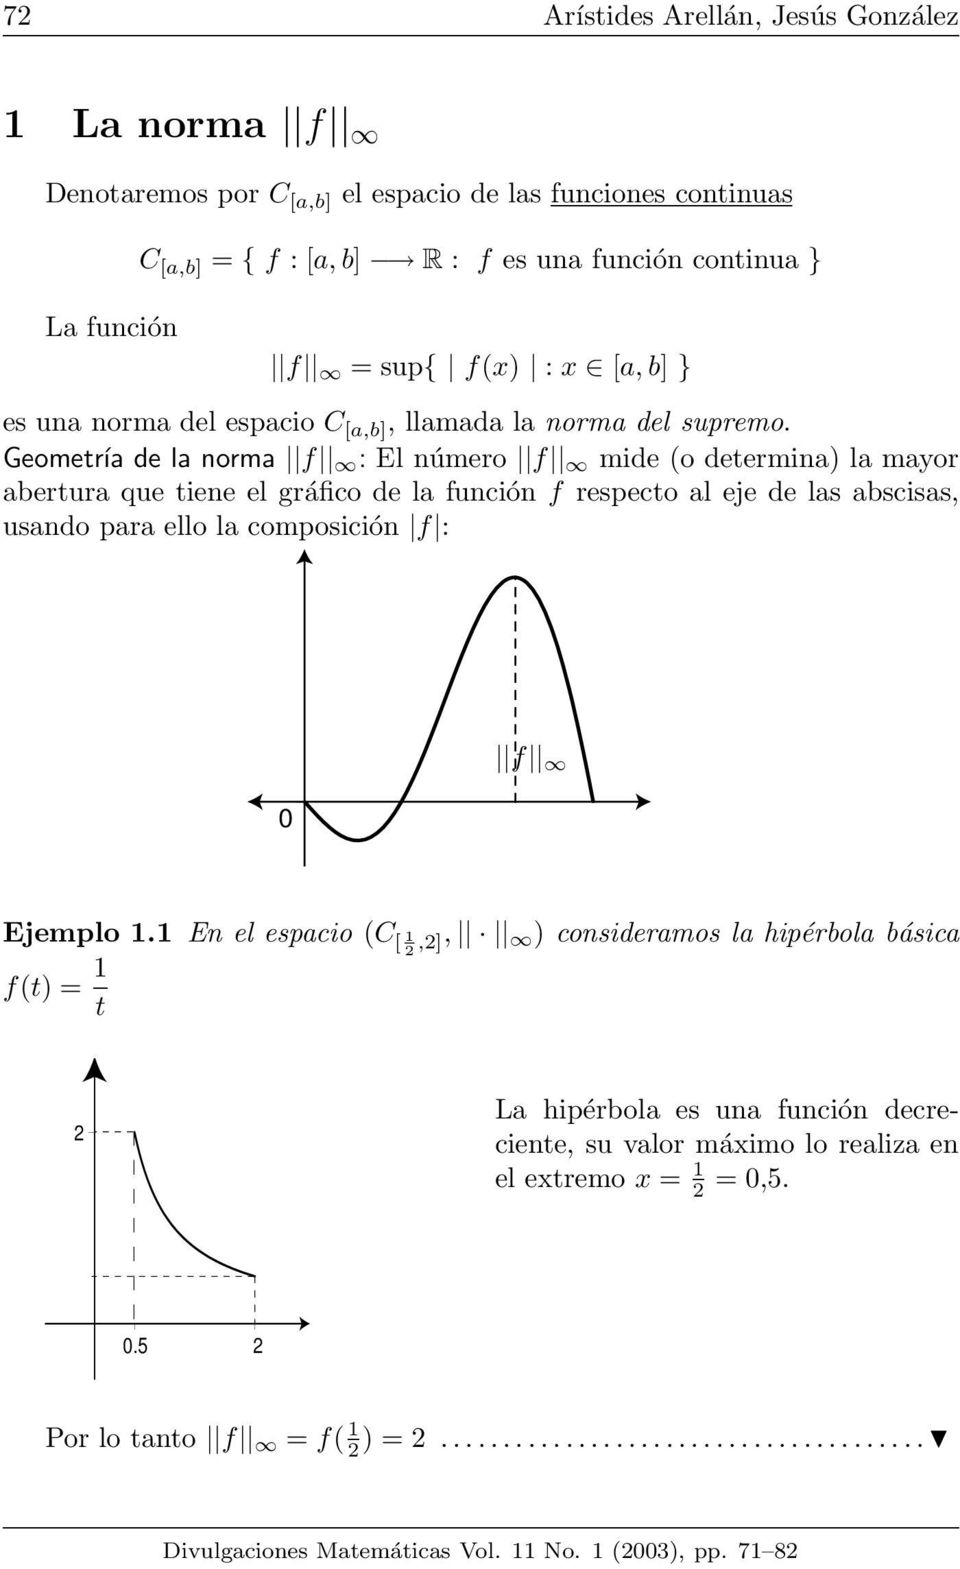 Geometrí de l norm f : El número f mide (o determin) l myor bertur que tiene el gráfico de l función f respecto l eje de ls bsciss, usndo pr ello l composición f : 0 f